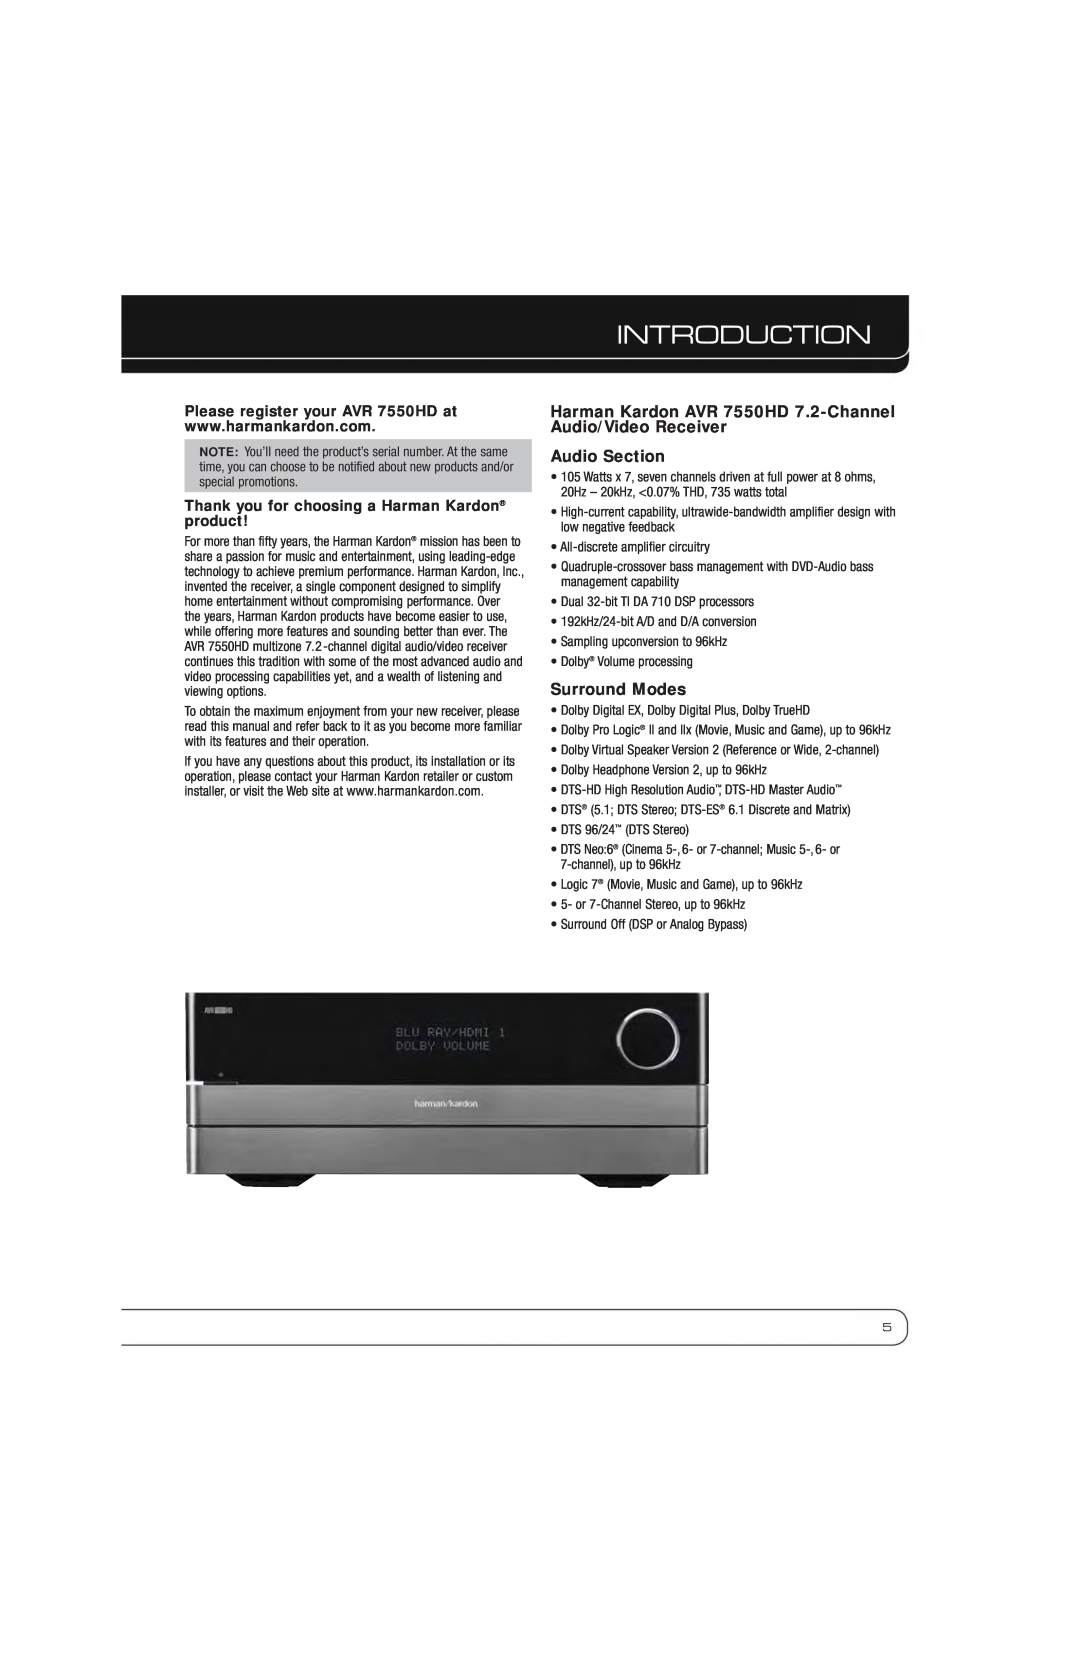 Harman-Kardon AVR 7550HD Introduction, Audio Section, Surround Modes, Thank you for choosing a Harman Kardon product 